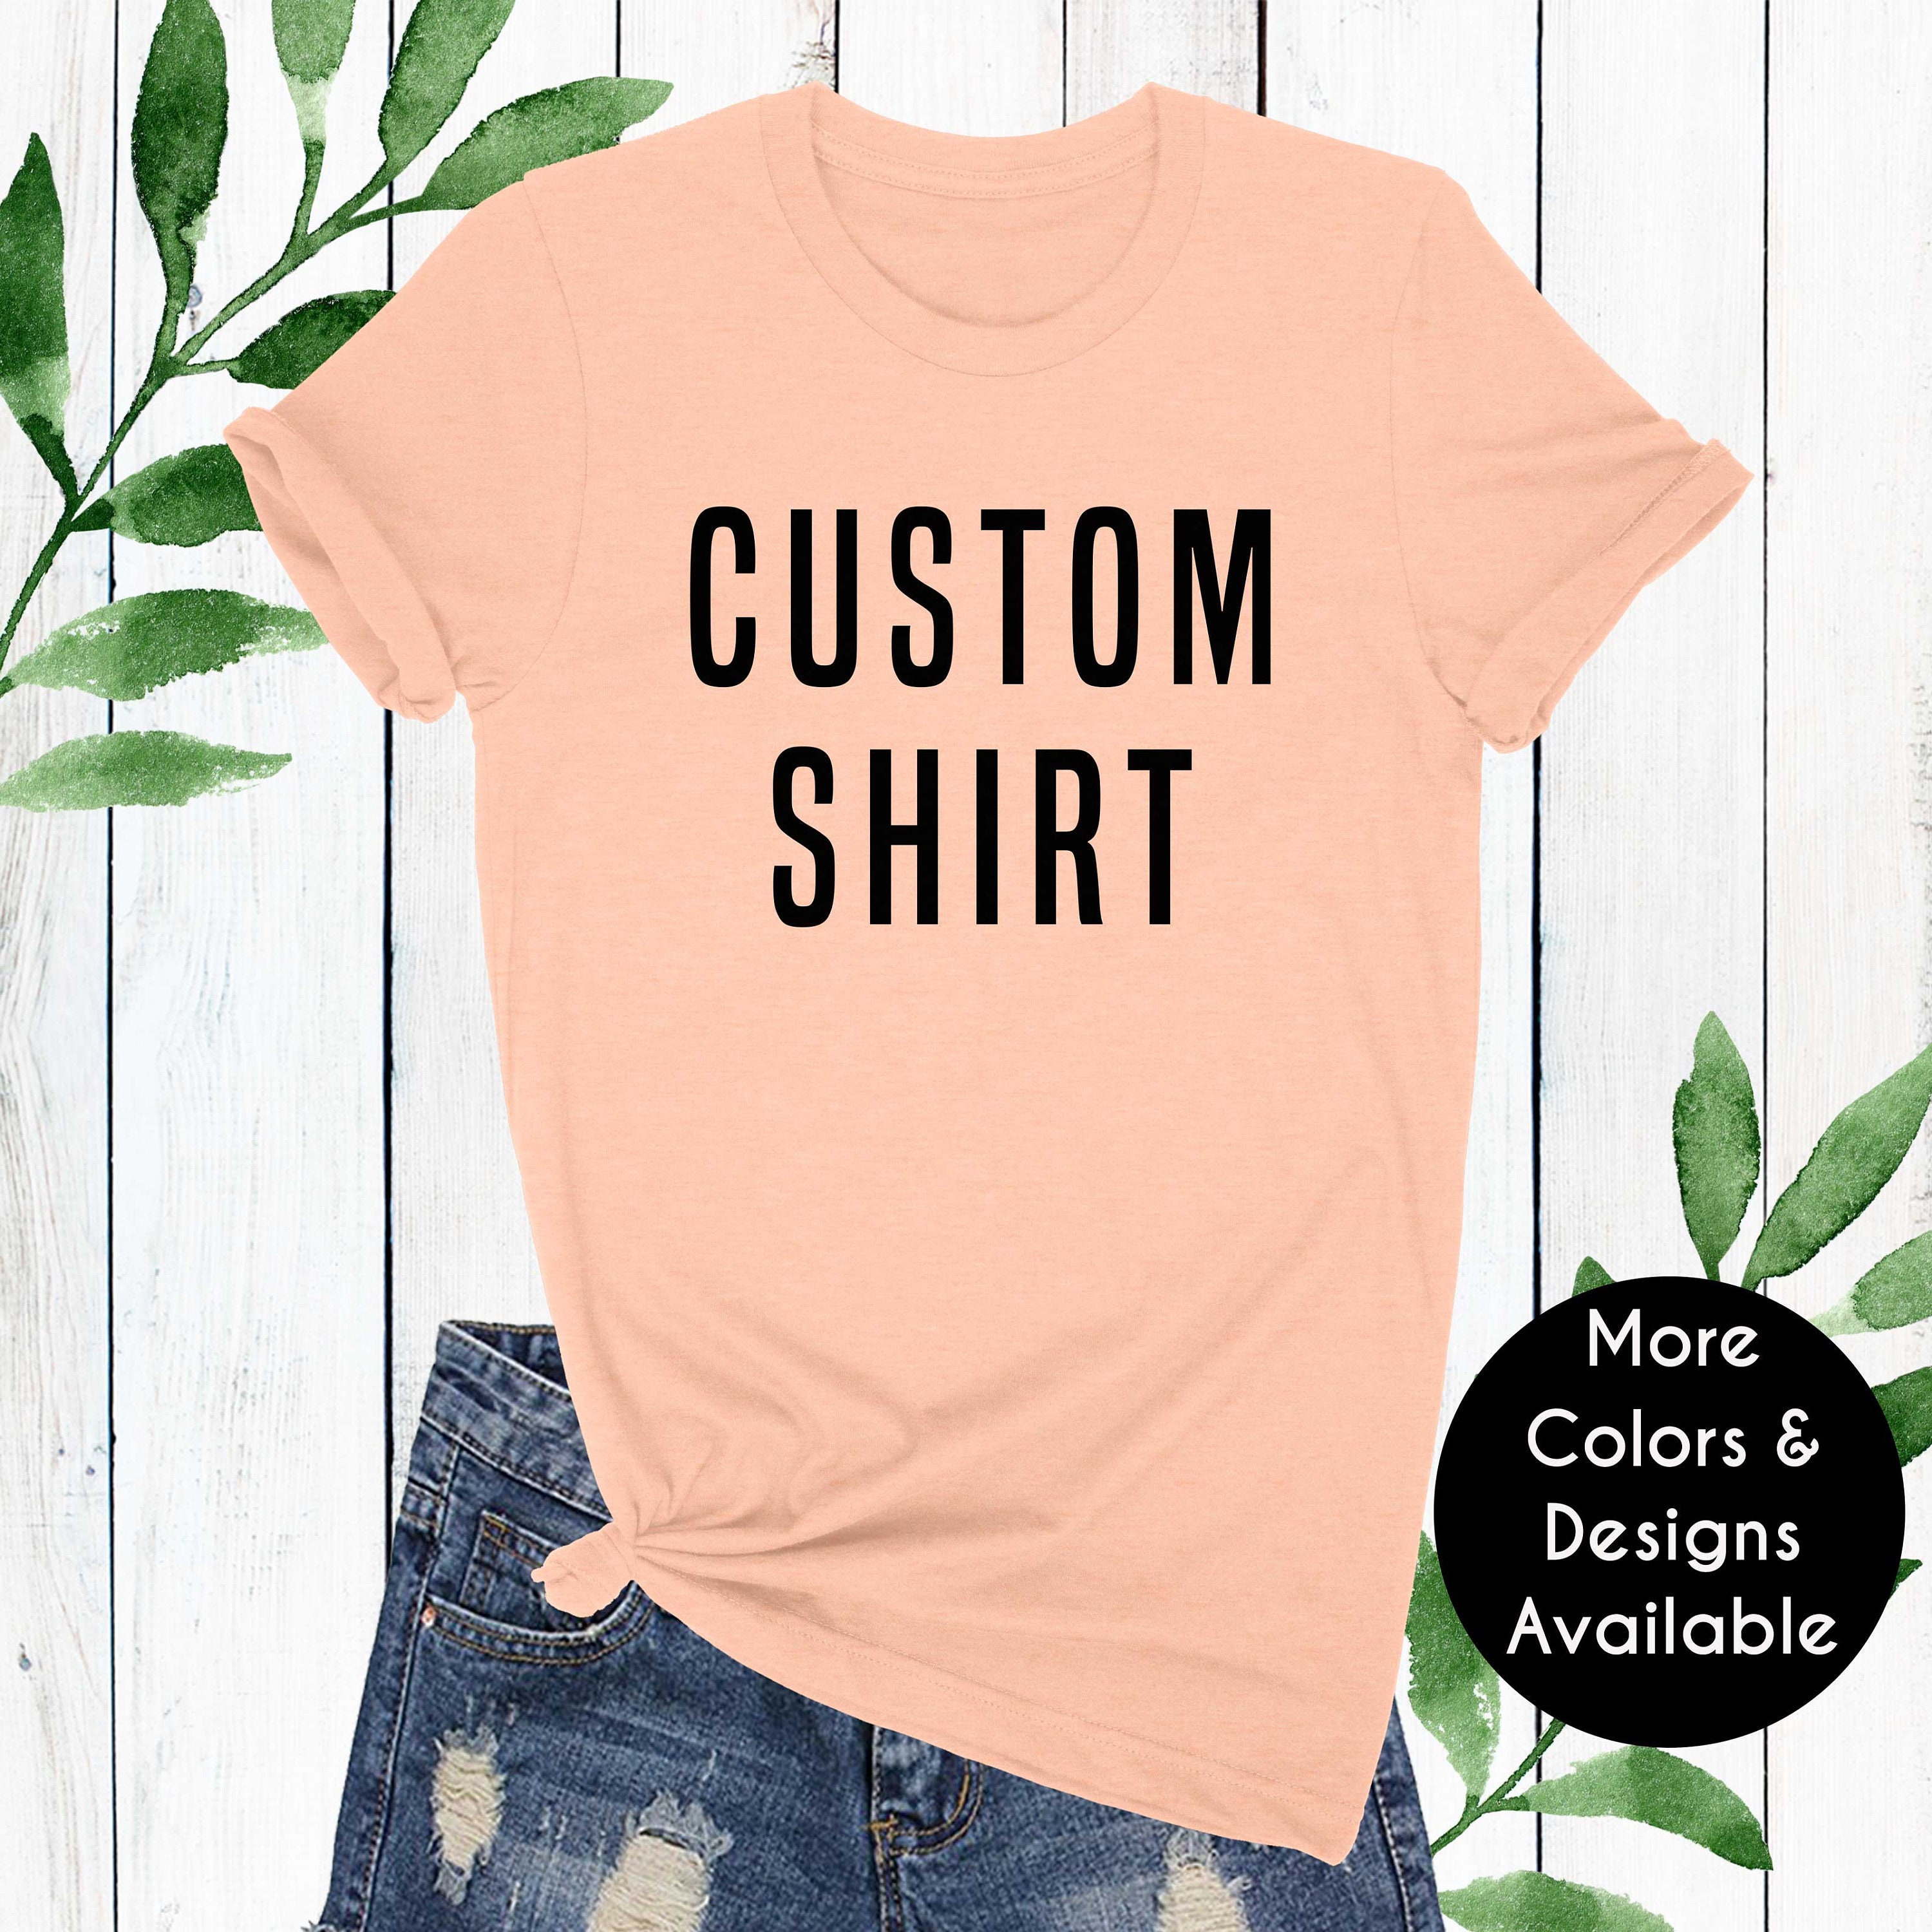 Two color baseball tee shirt design with extreme stylized baseball